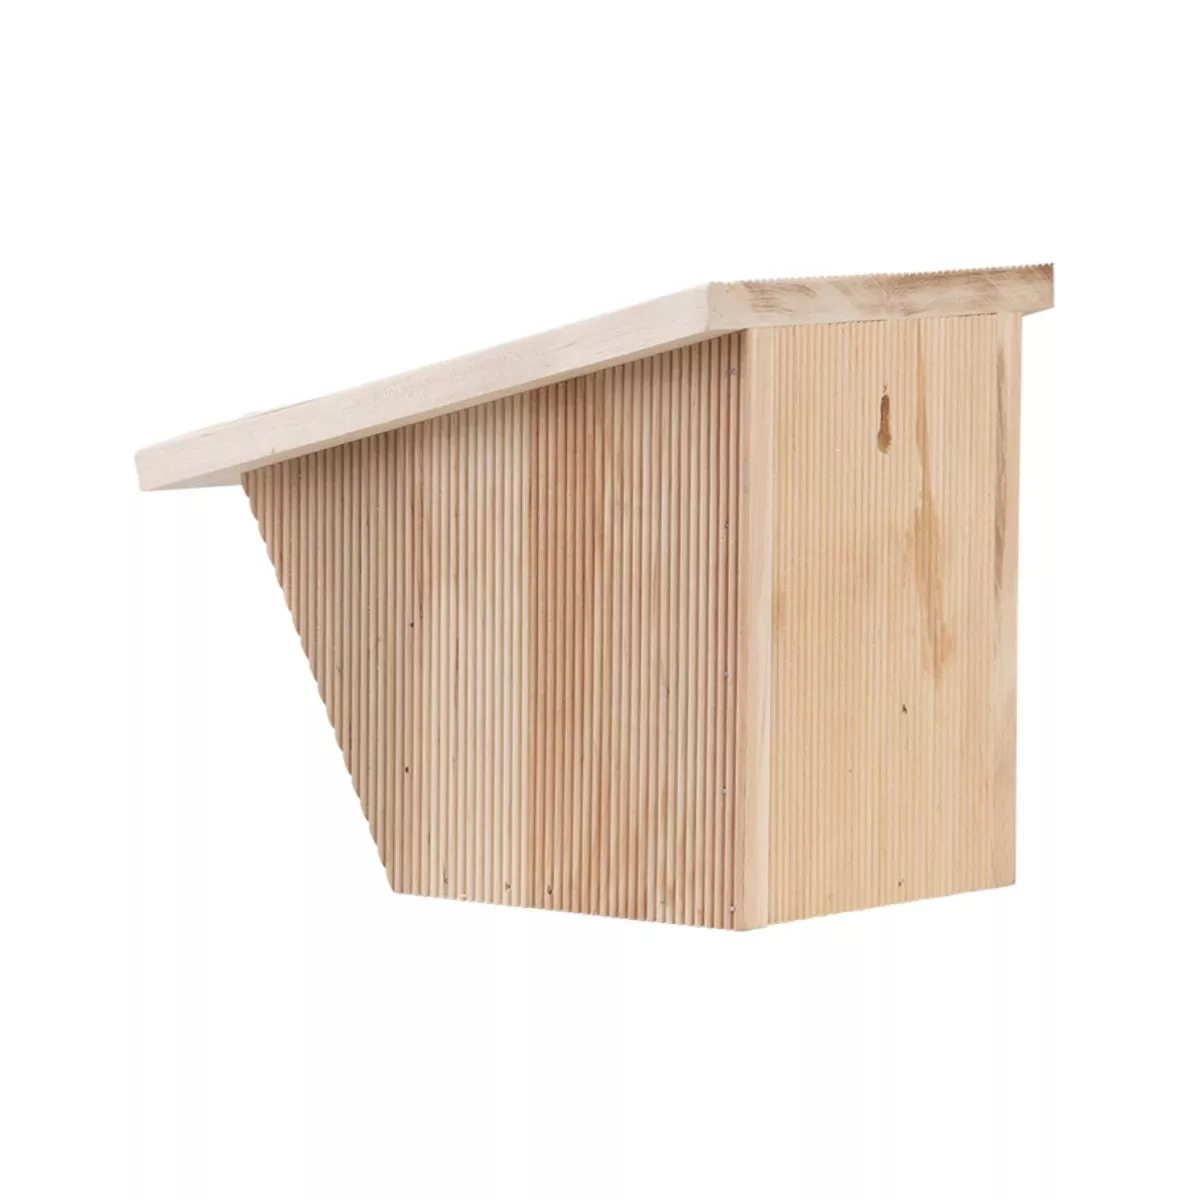 Casuta pentru pasari maro deschis din lemn de arin Robin Esschert Design 4